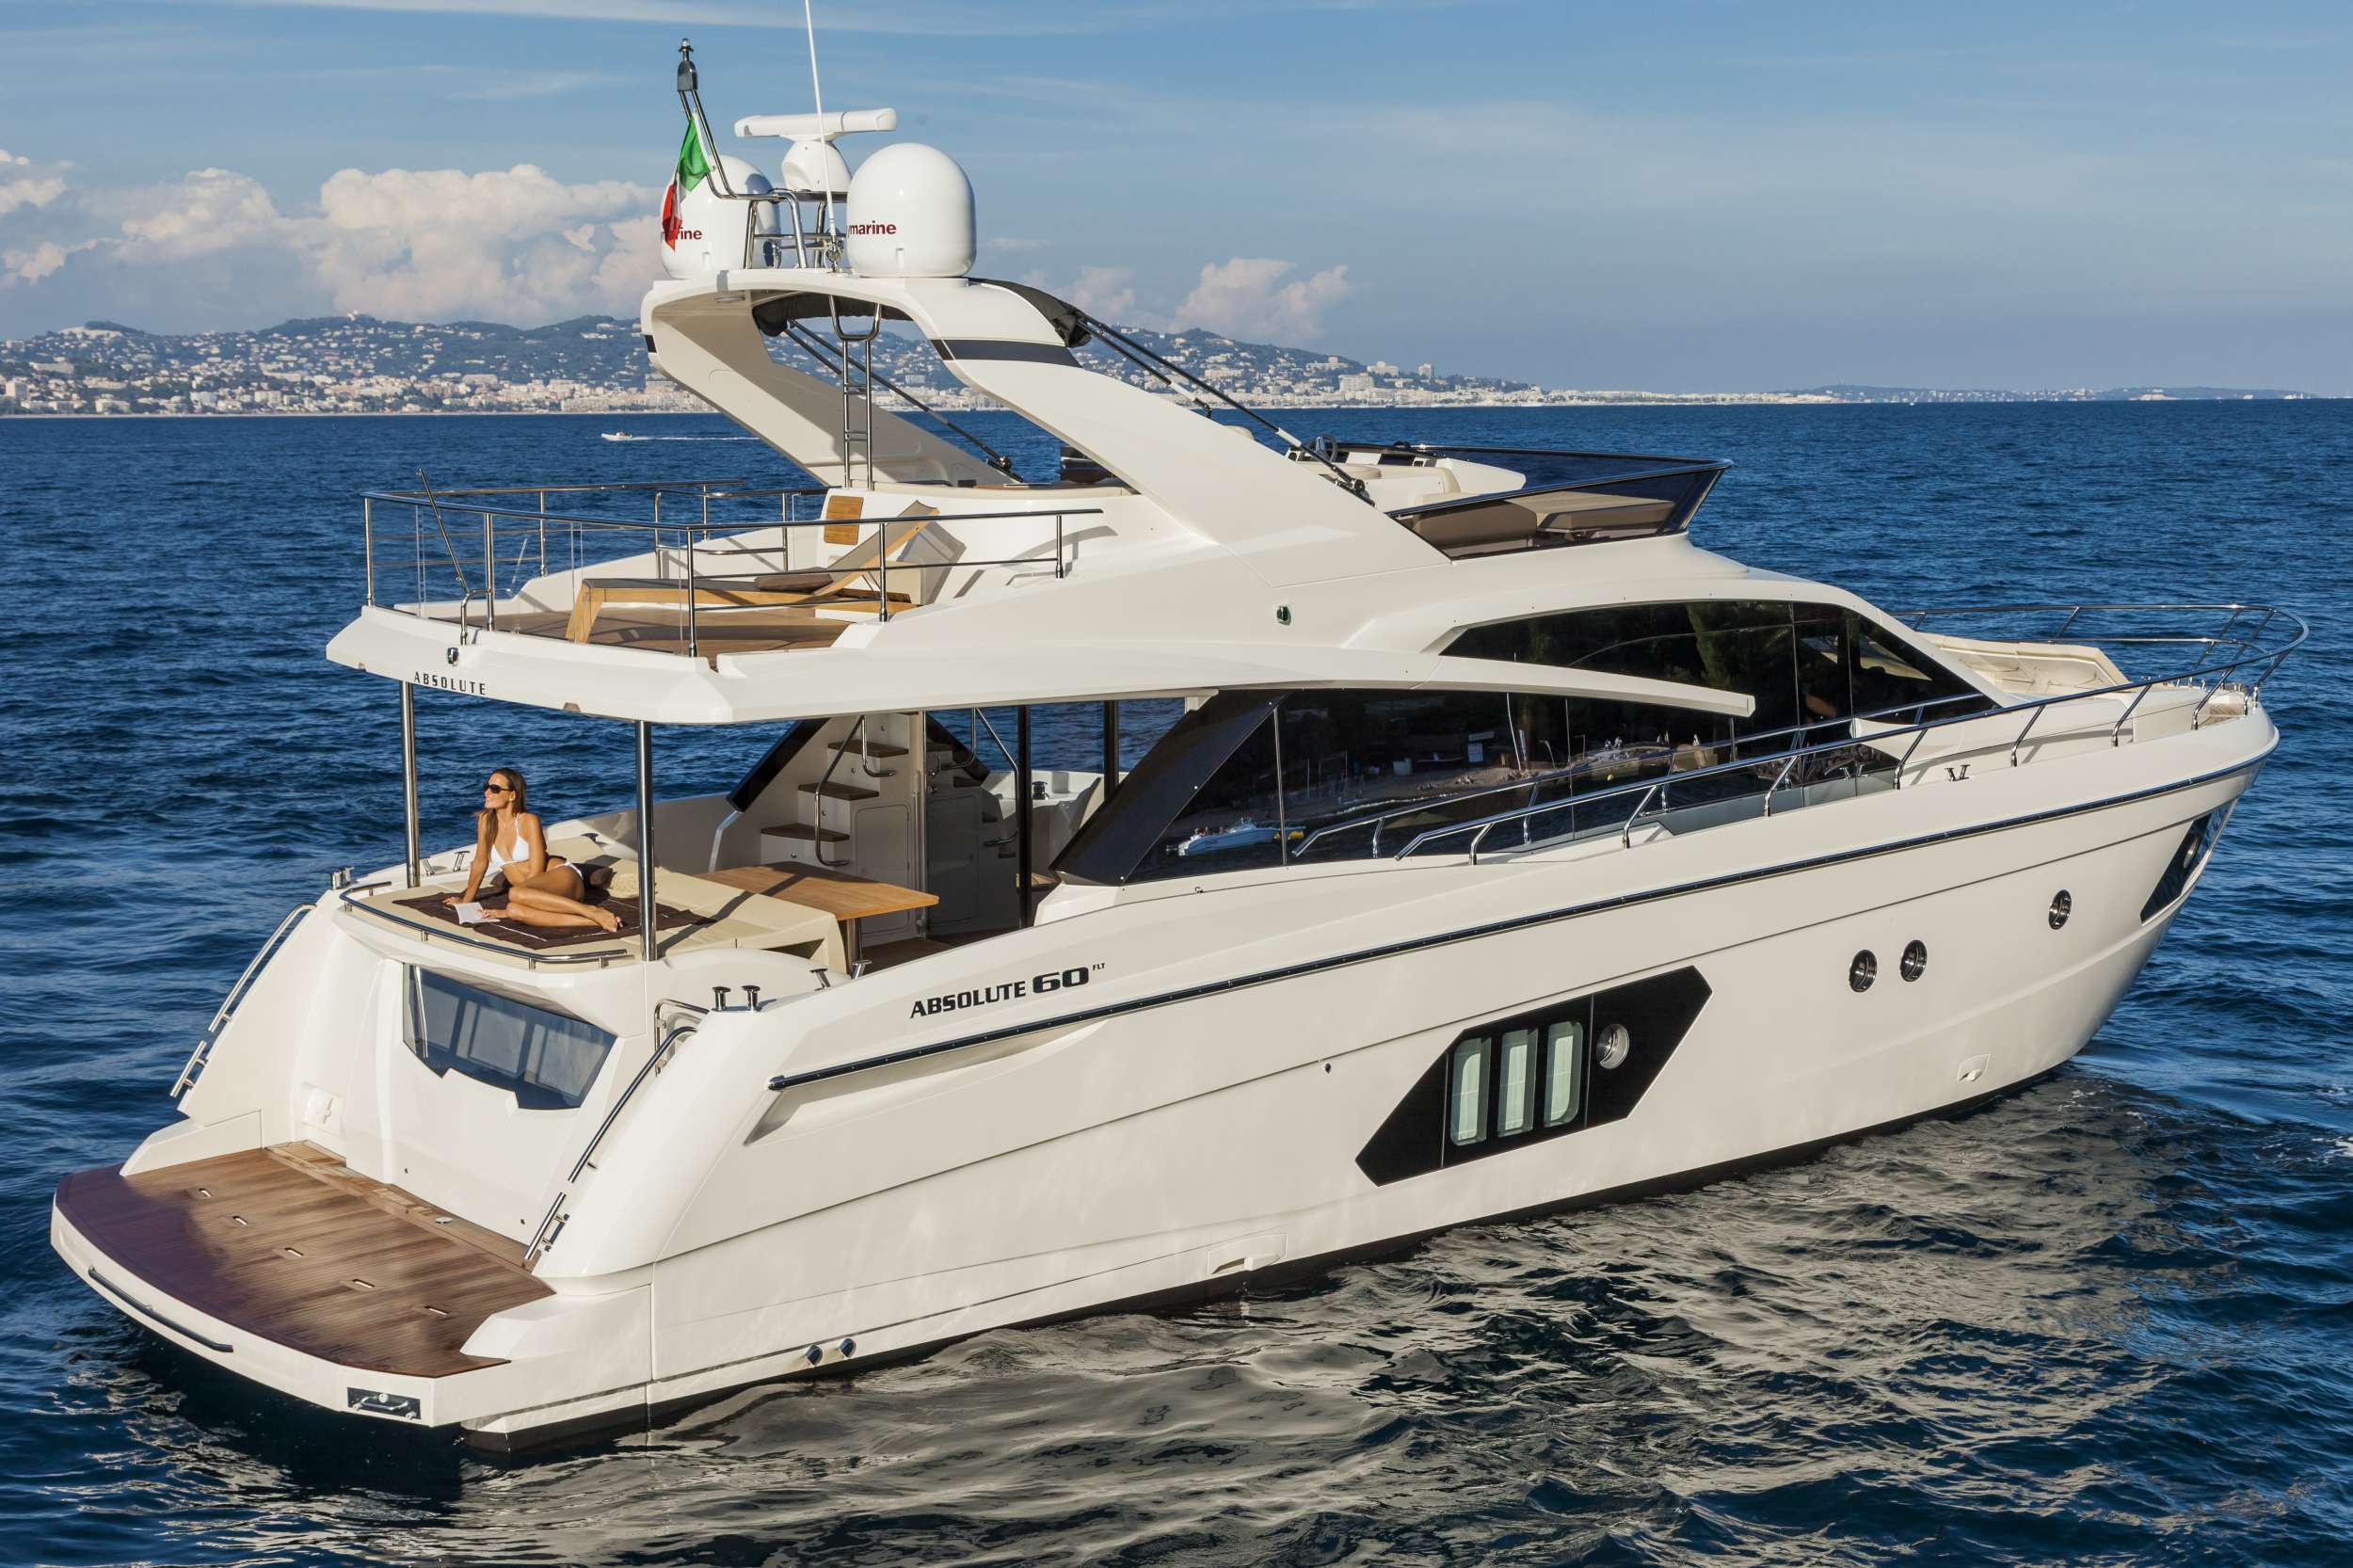 ABSOLUTE - Yacht Charter Beaulieu-sur-Mer & Boat hire in Fr. Riviera, Corsica & Sardinia 1